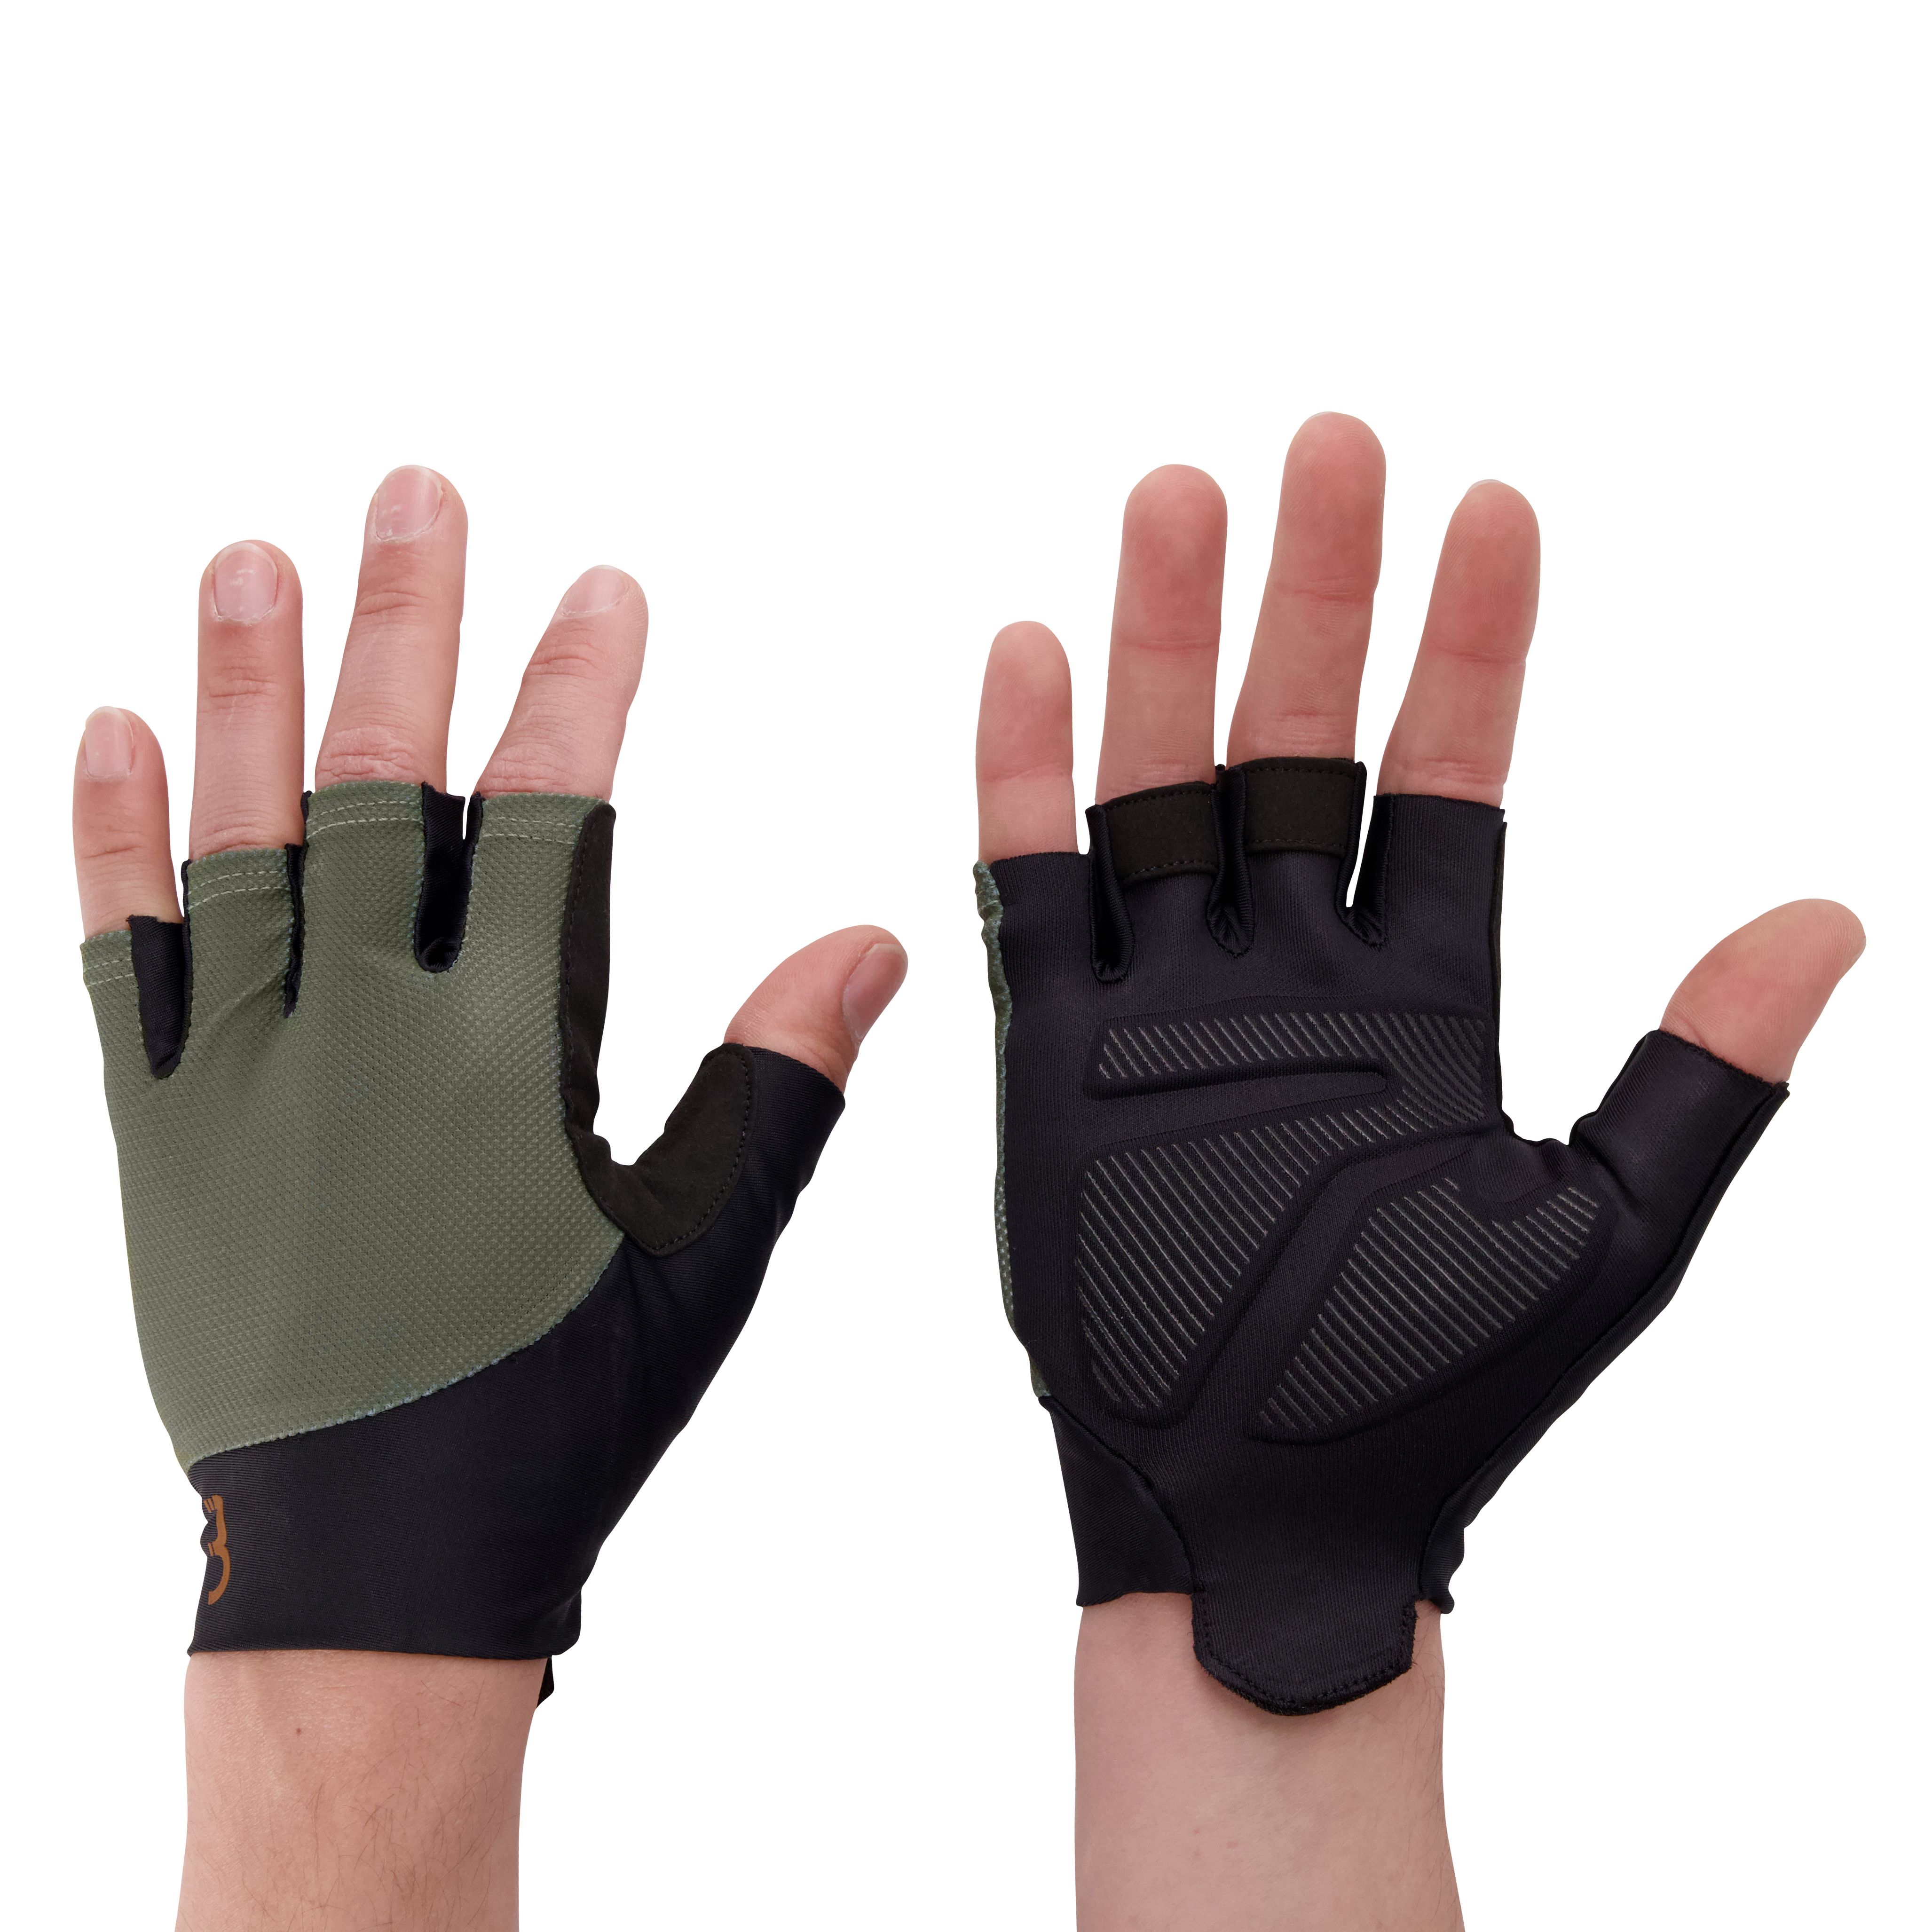 Pave gloves